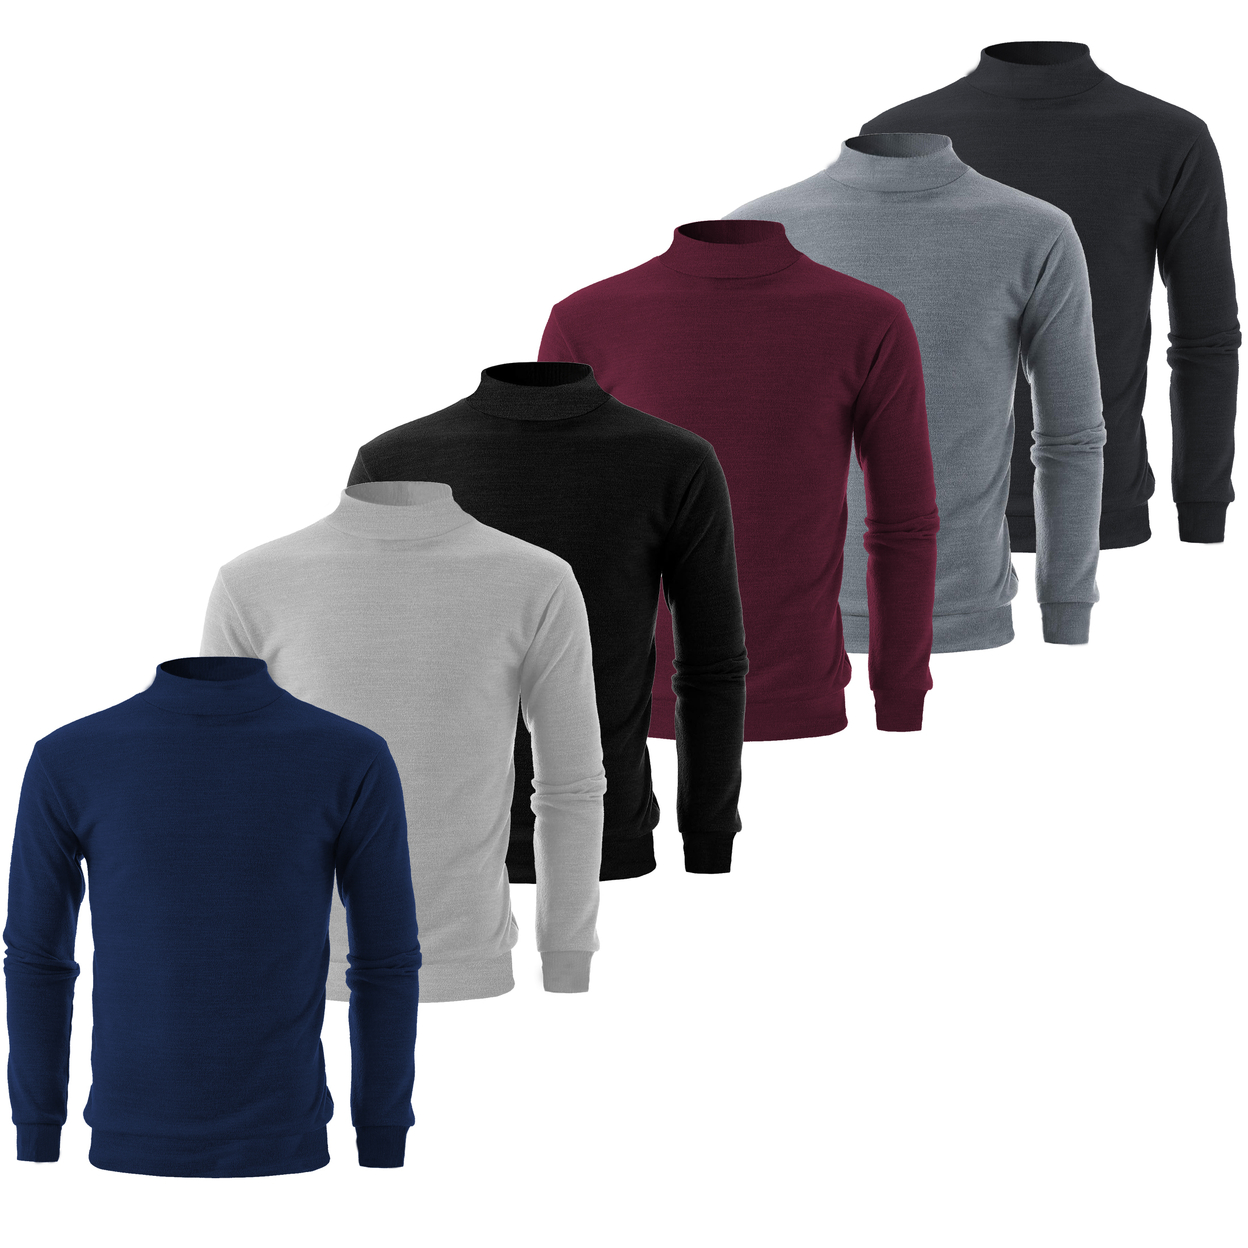 Multi-Pack: Men's Winter Warm Cozy Knit Slim Fit Mock Neck Sweater - 1-pack, X-large